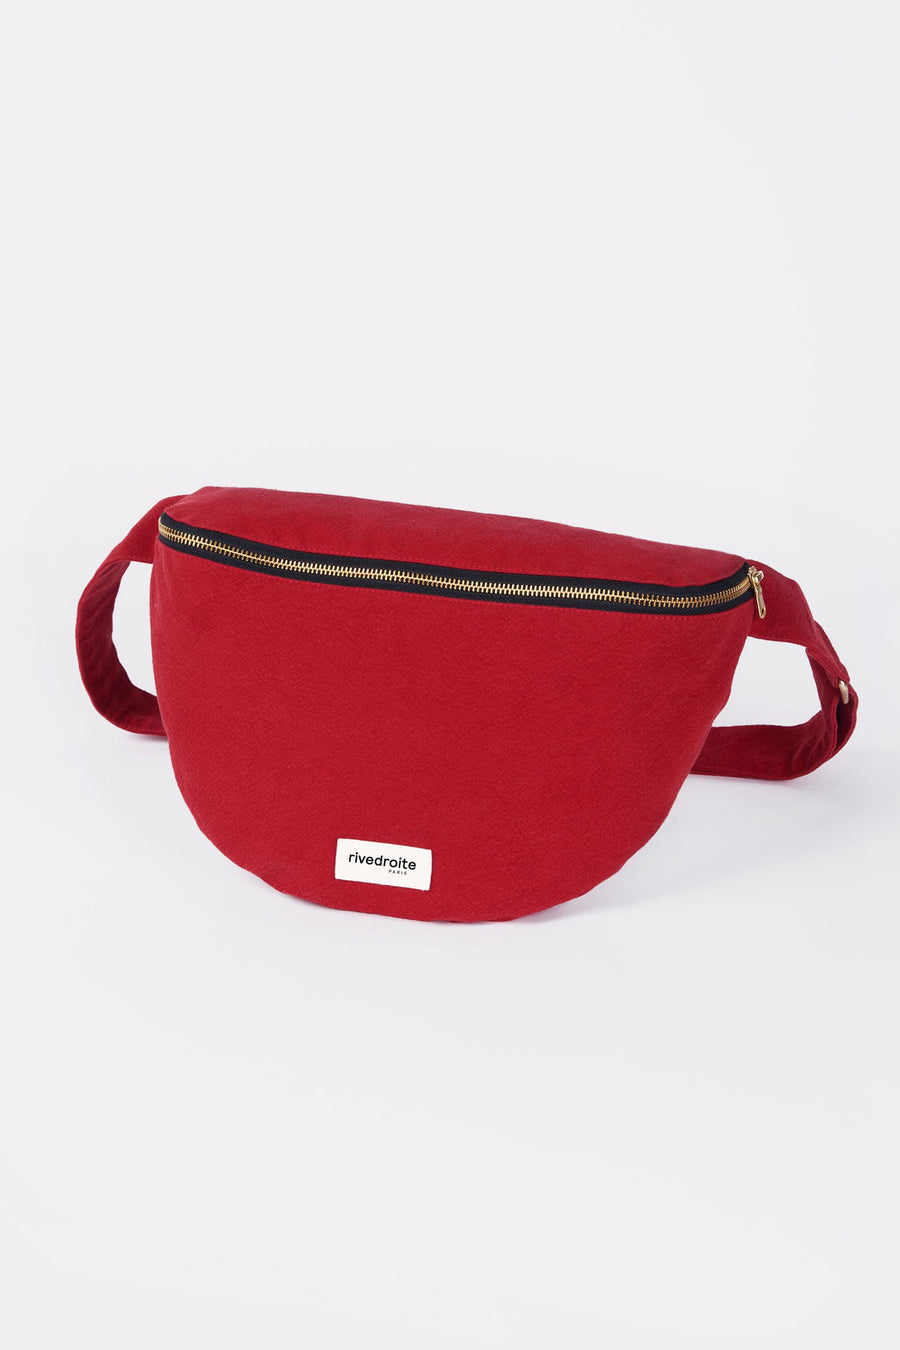 Rivedroite Custine XL The Waist Bag - Vibrant Red